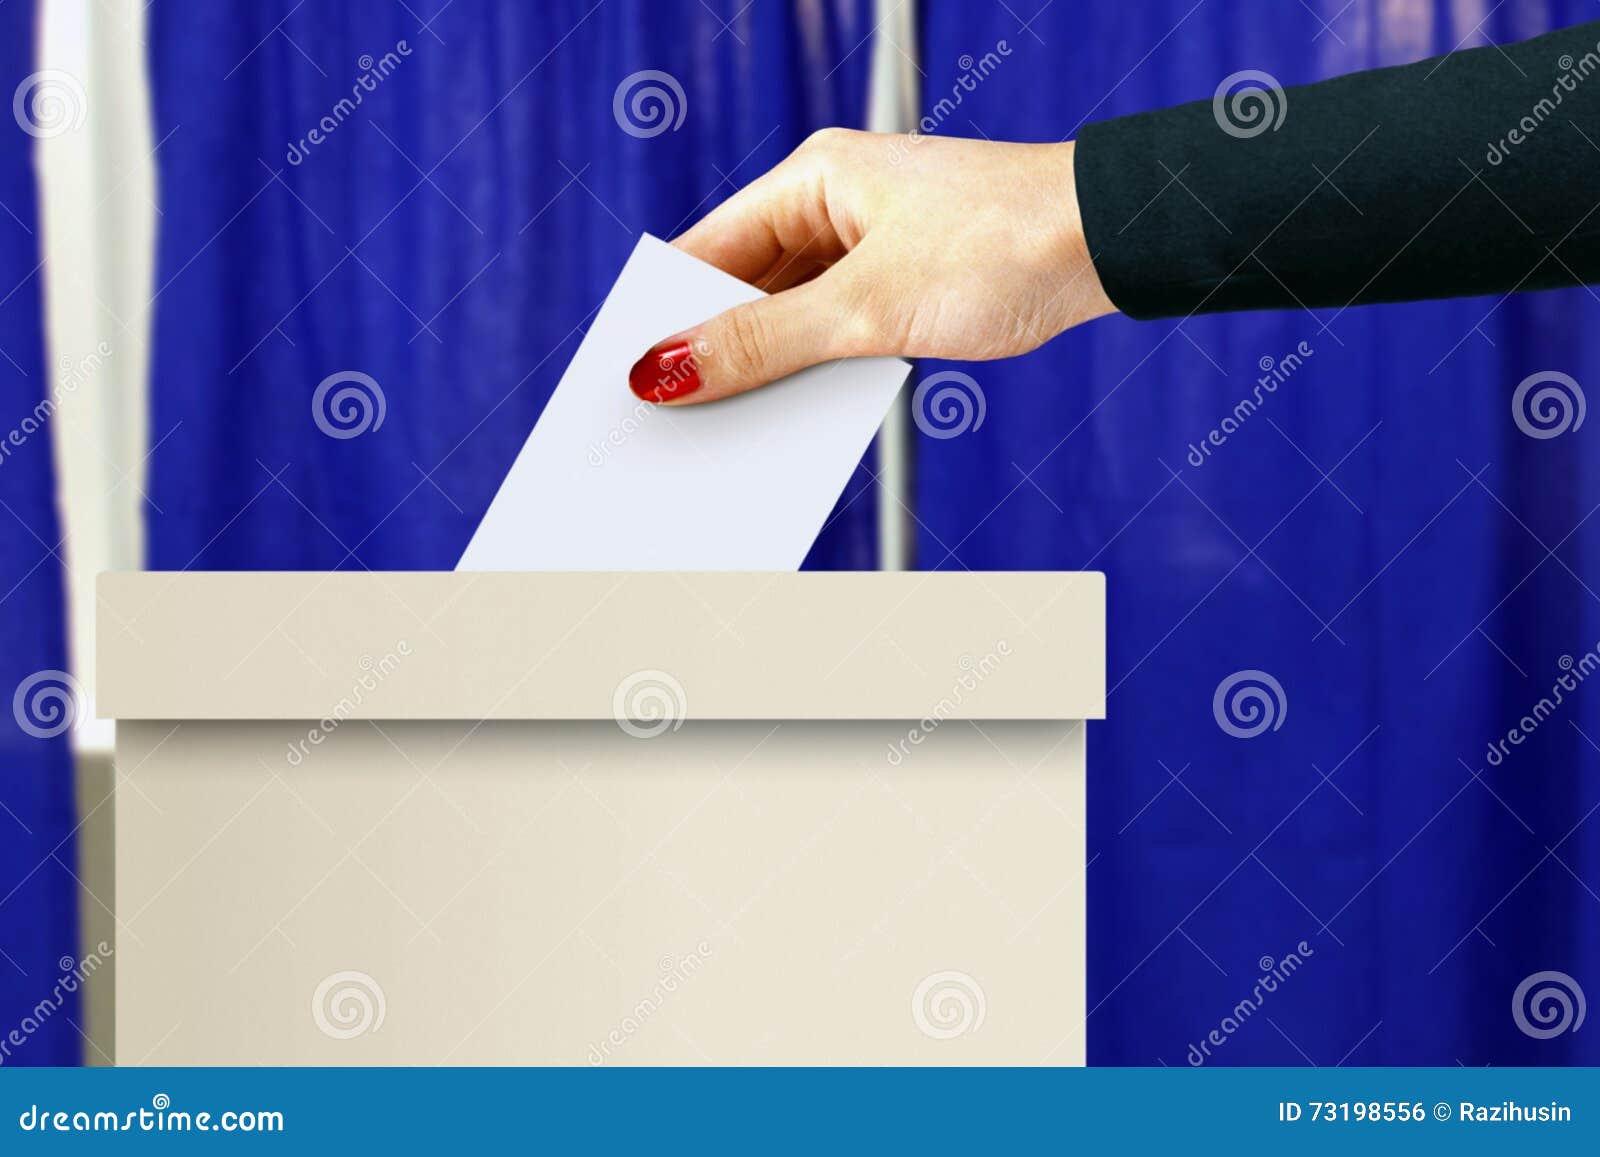 ballot box with women hand casting vote